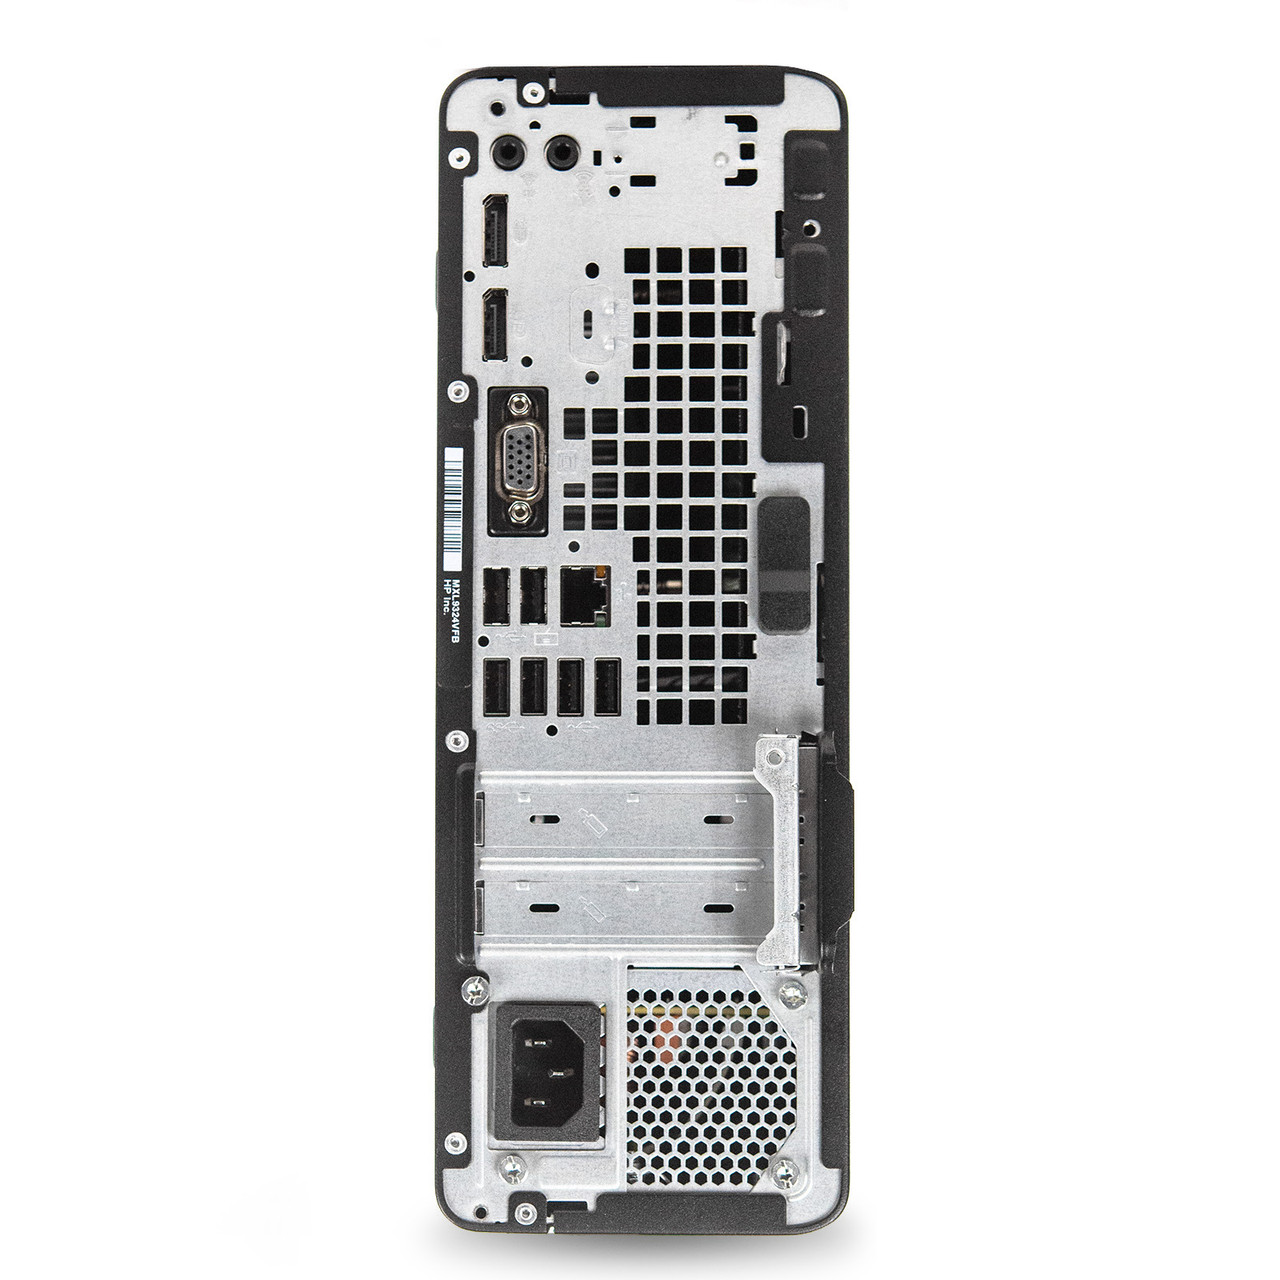 HP ProDesk 600 G3 SFF i5-6500 3.20GHz | Revive IT